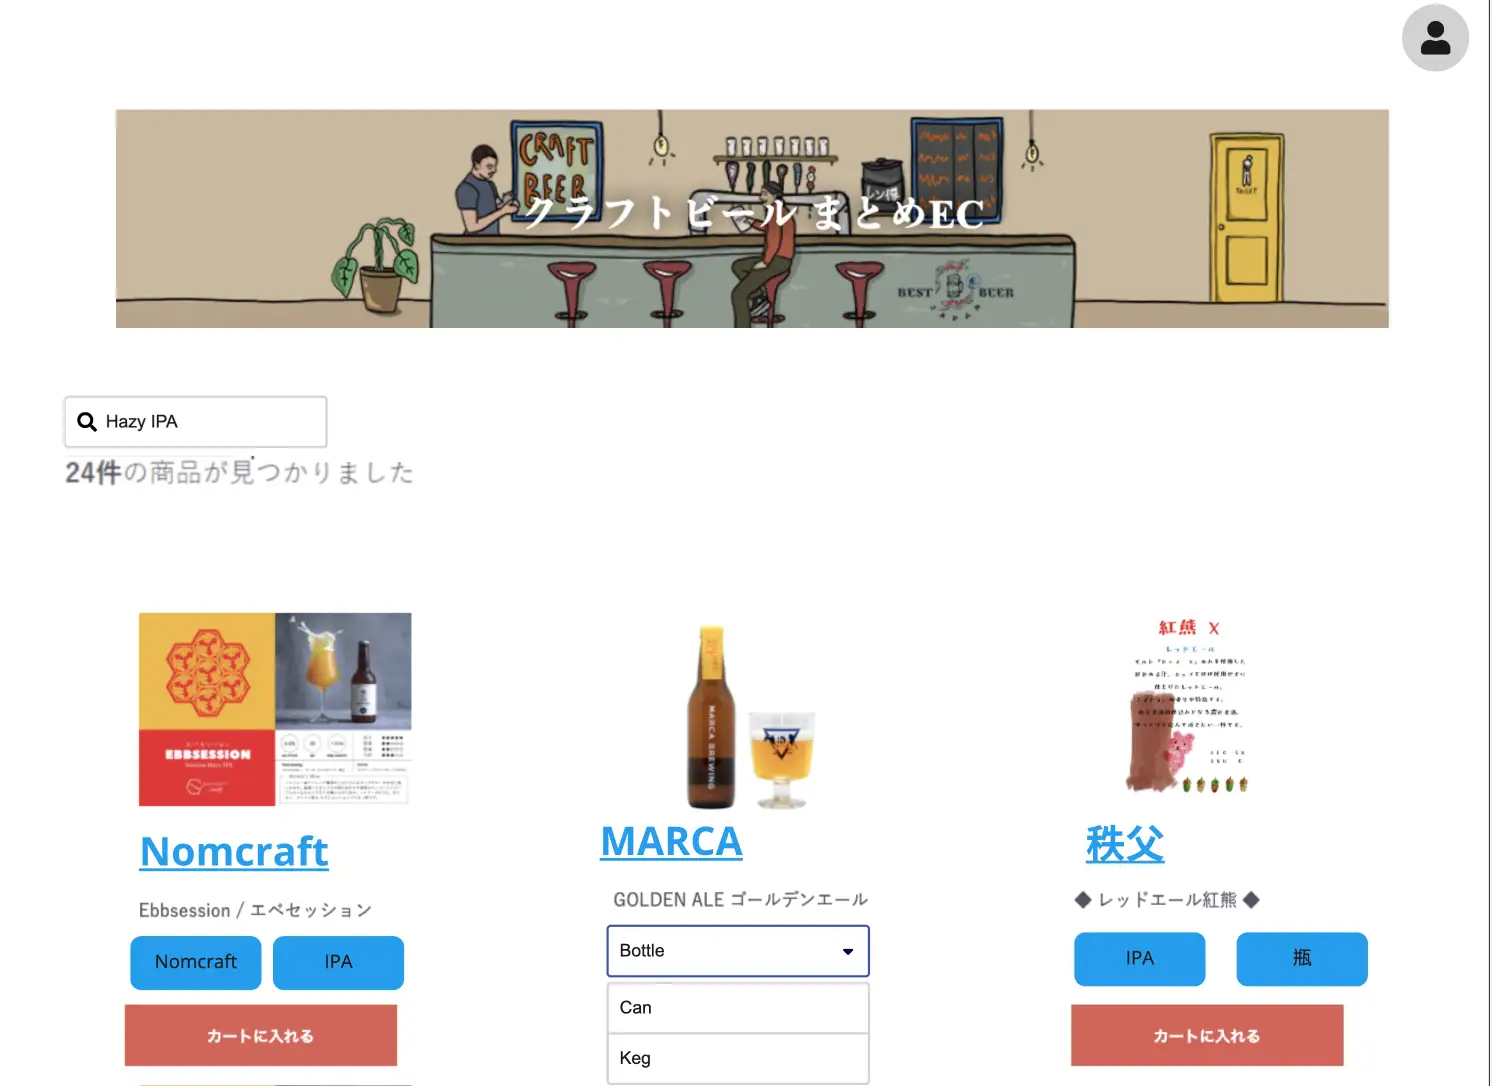 Best Beer Japanが提供する業務店専用クラフトビールプラットフォームのイメージ。